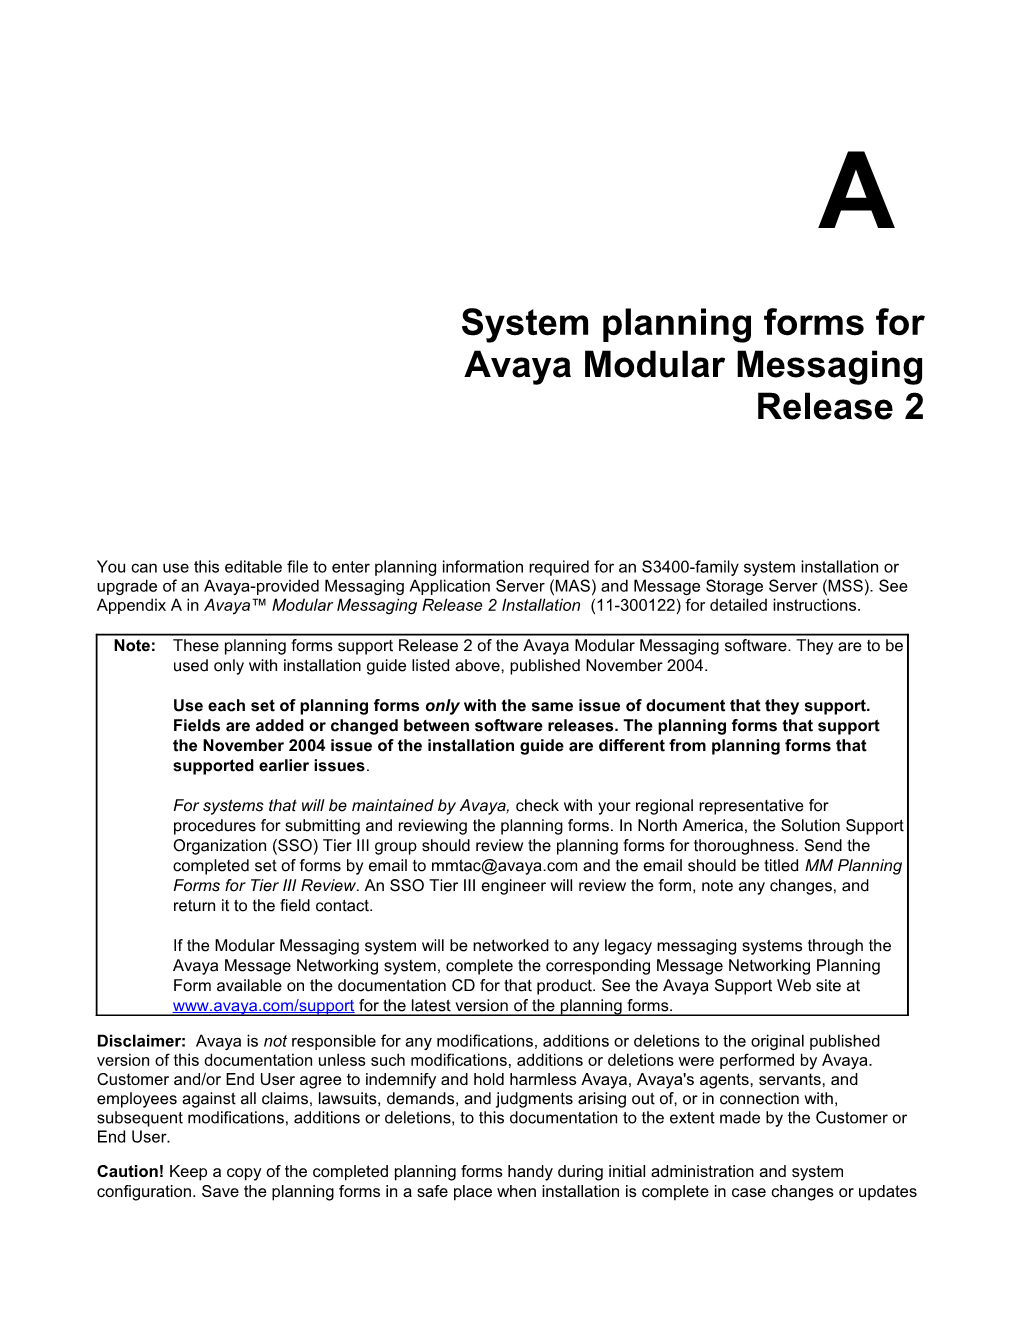 Avaya Modular Messaging Release 2 System Planning Forms - 1